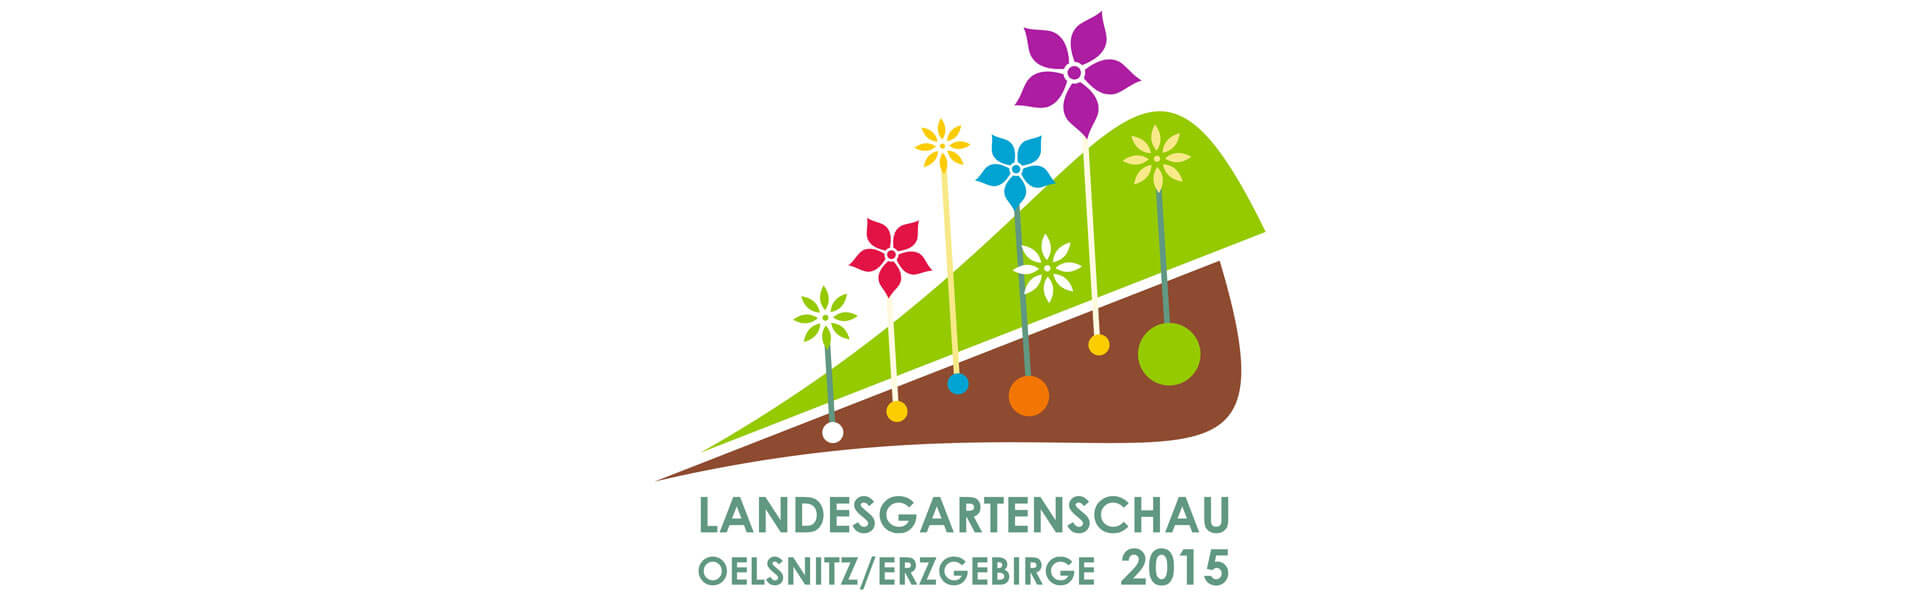 Tagesfahrt 2015 TF 1548 - Landesgartenschau Oelsnitz